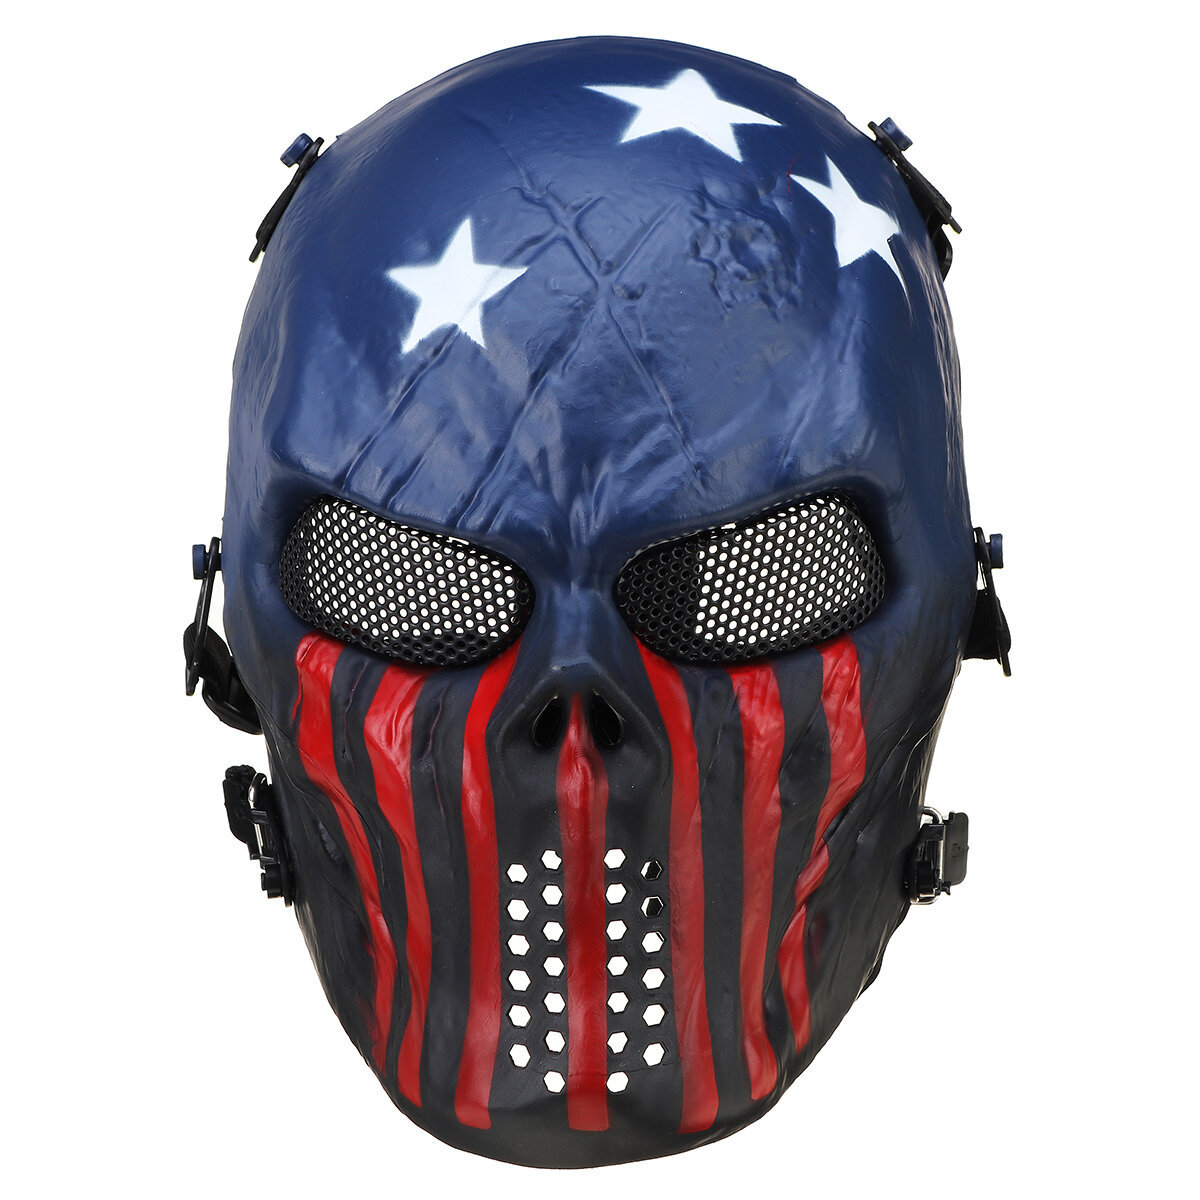 Airsoft Paintball-masker Full Face Skull Skeleton Metal Mesh Eye Game Safety Guard